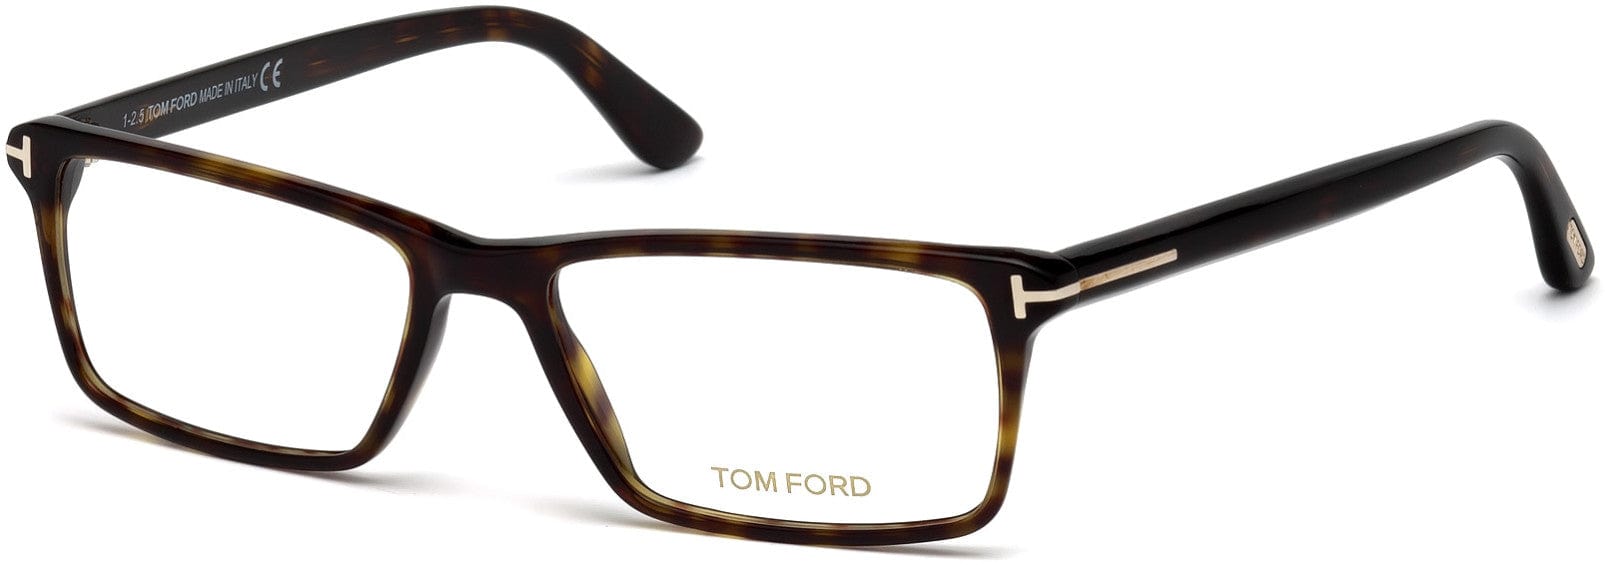 Tom Ford FT5408 Geometric Eyeglasses 052-052 - Shiny Classic Dark Havana, Shiny Rose Gold "t" Logo